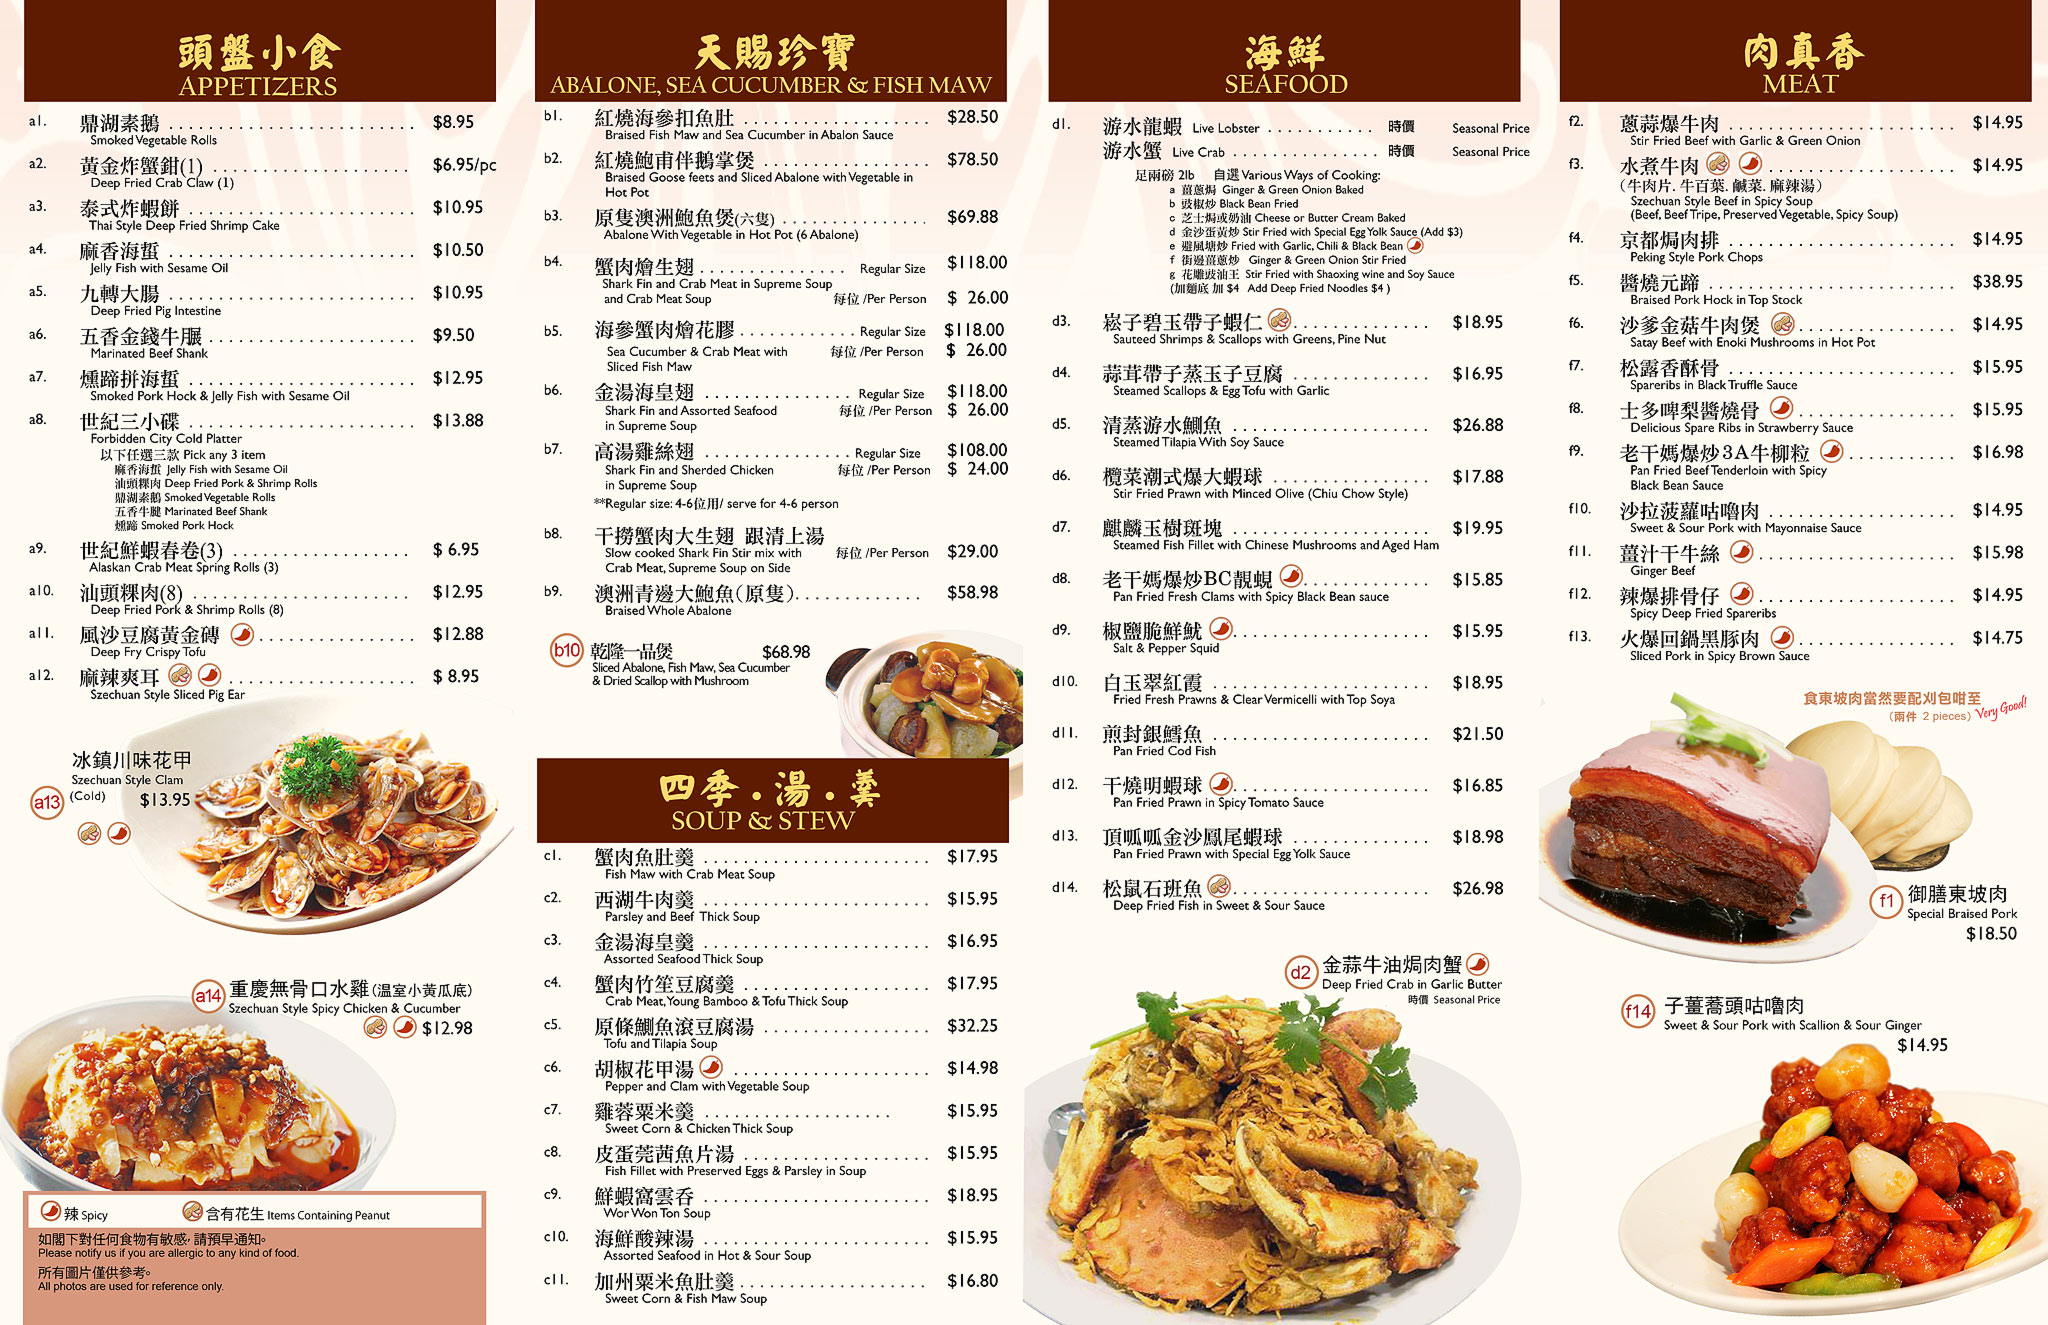 Asian bistro carterville menu